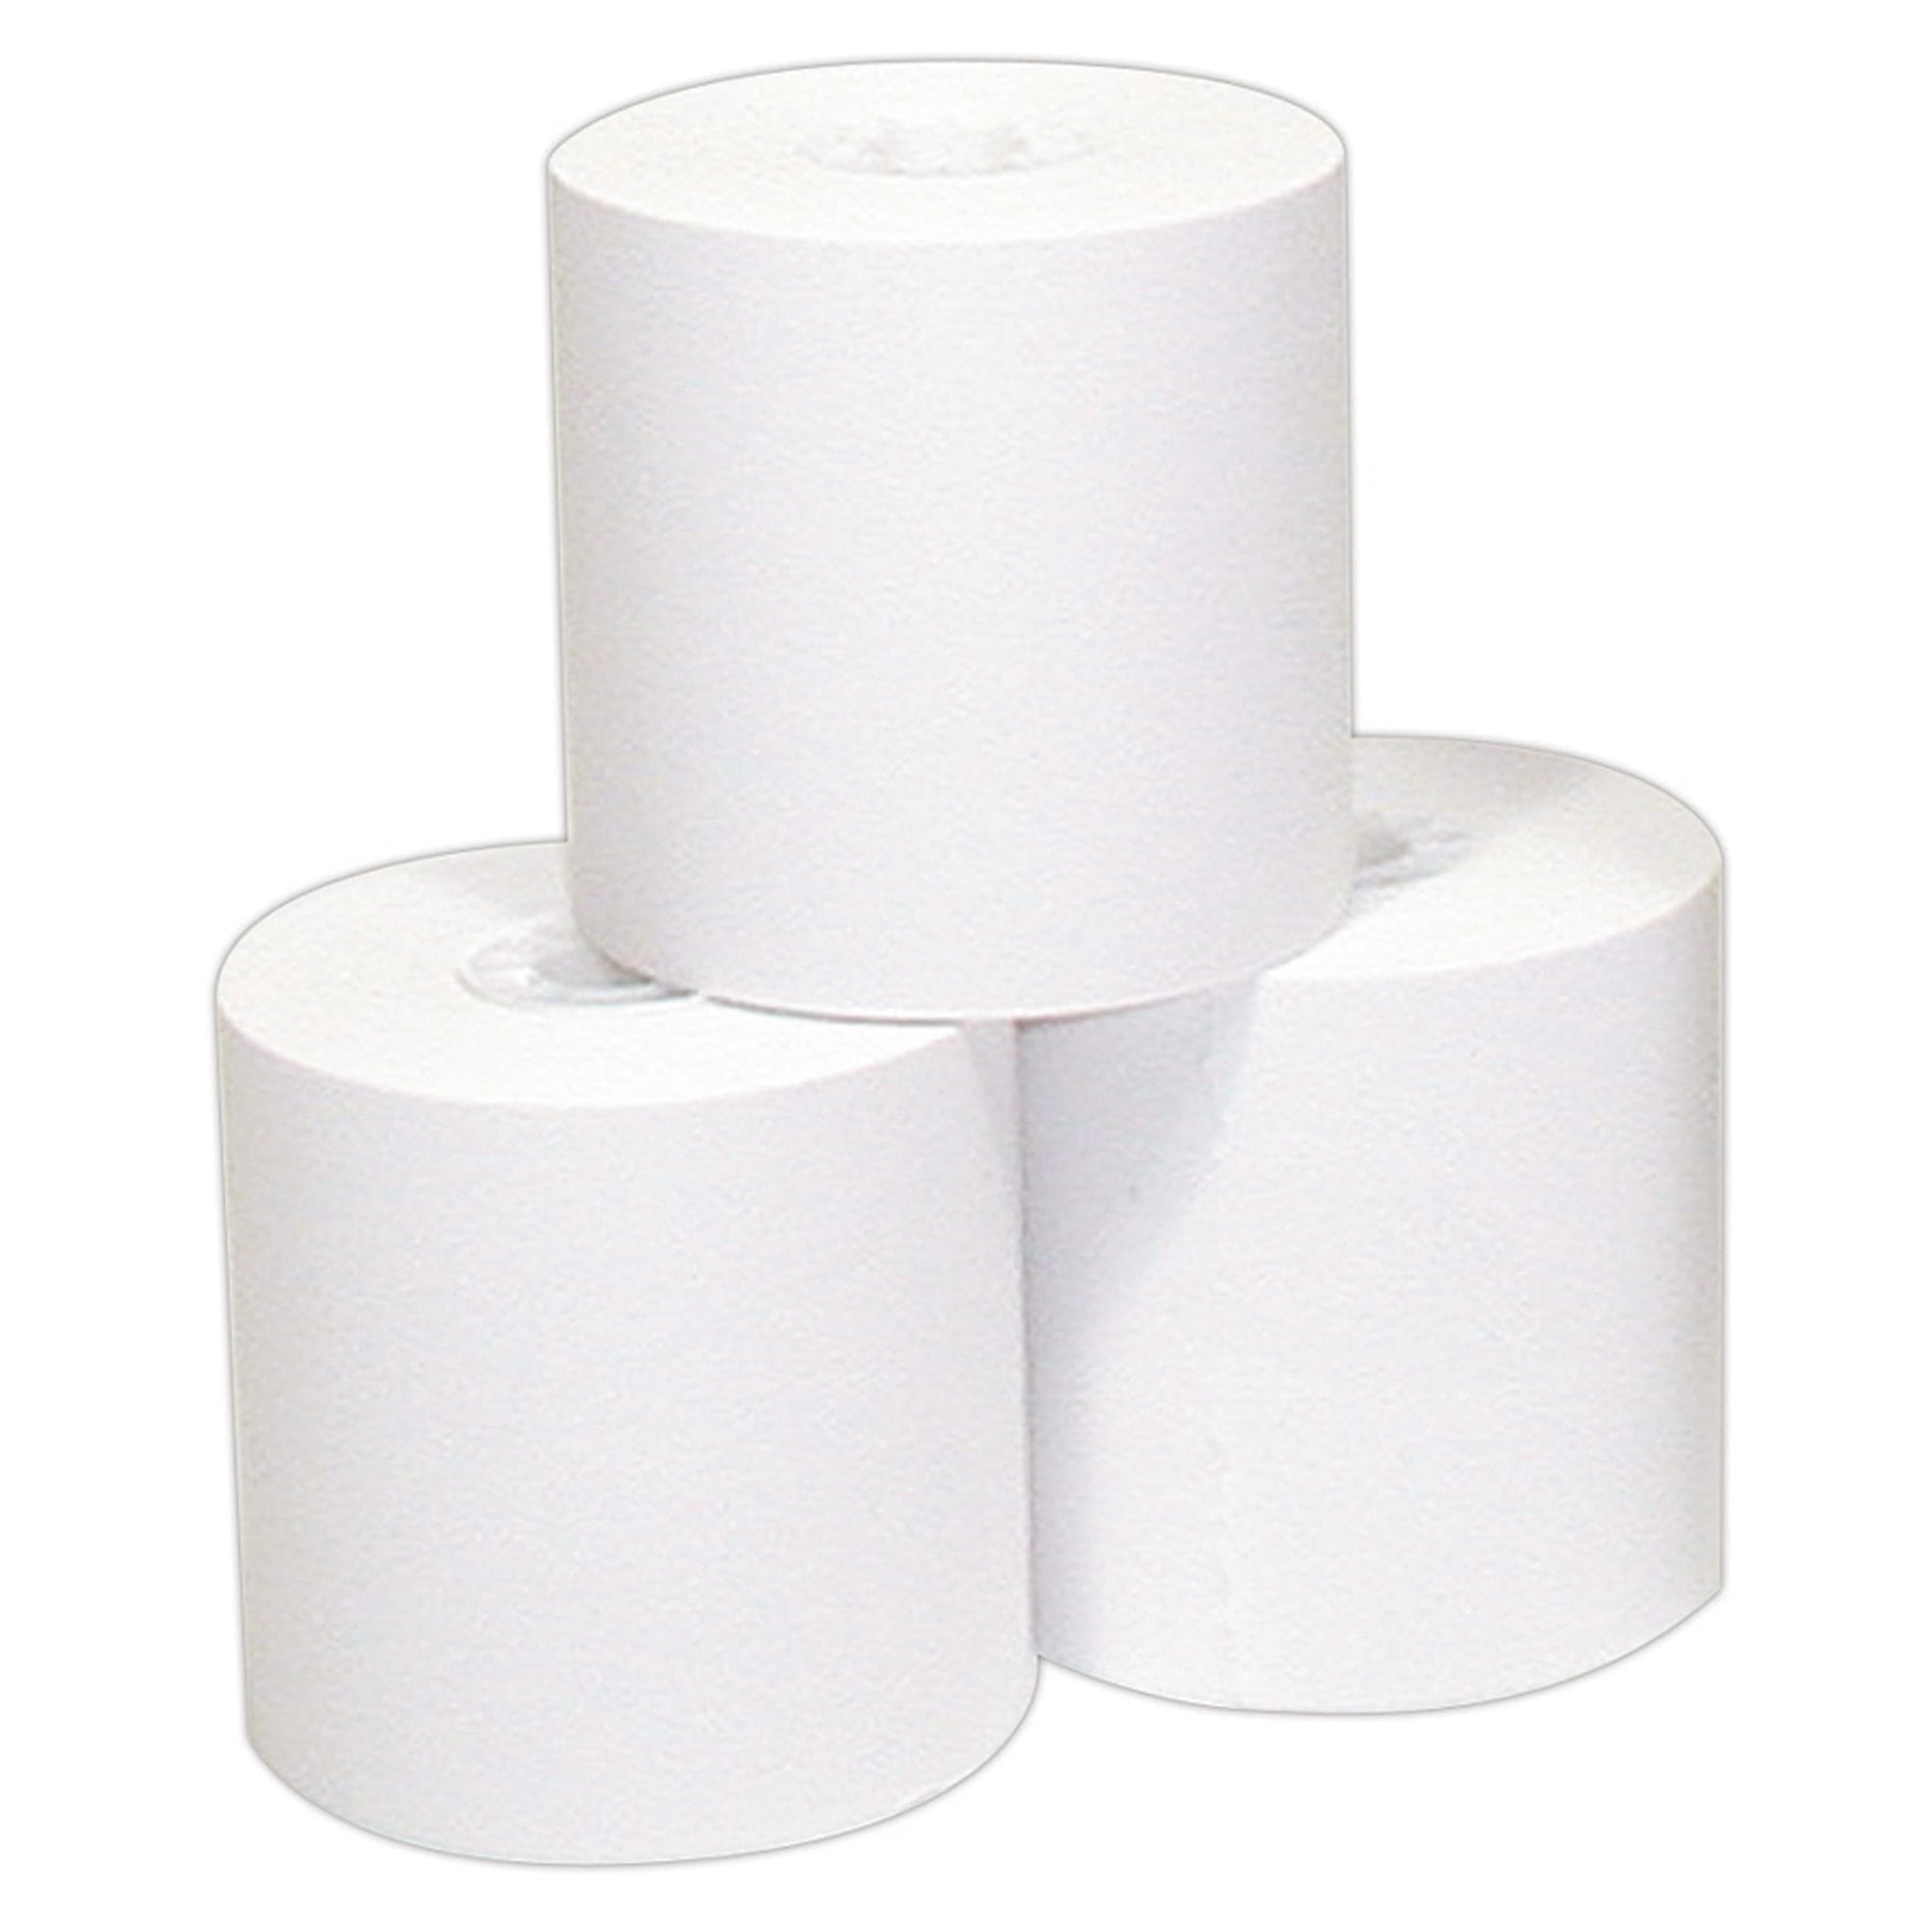 Vonlyst Receipt Paper 3 1/8 x 230 for Epson Thermal Printer 06 Rolls, White